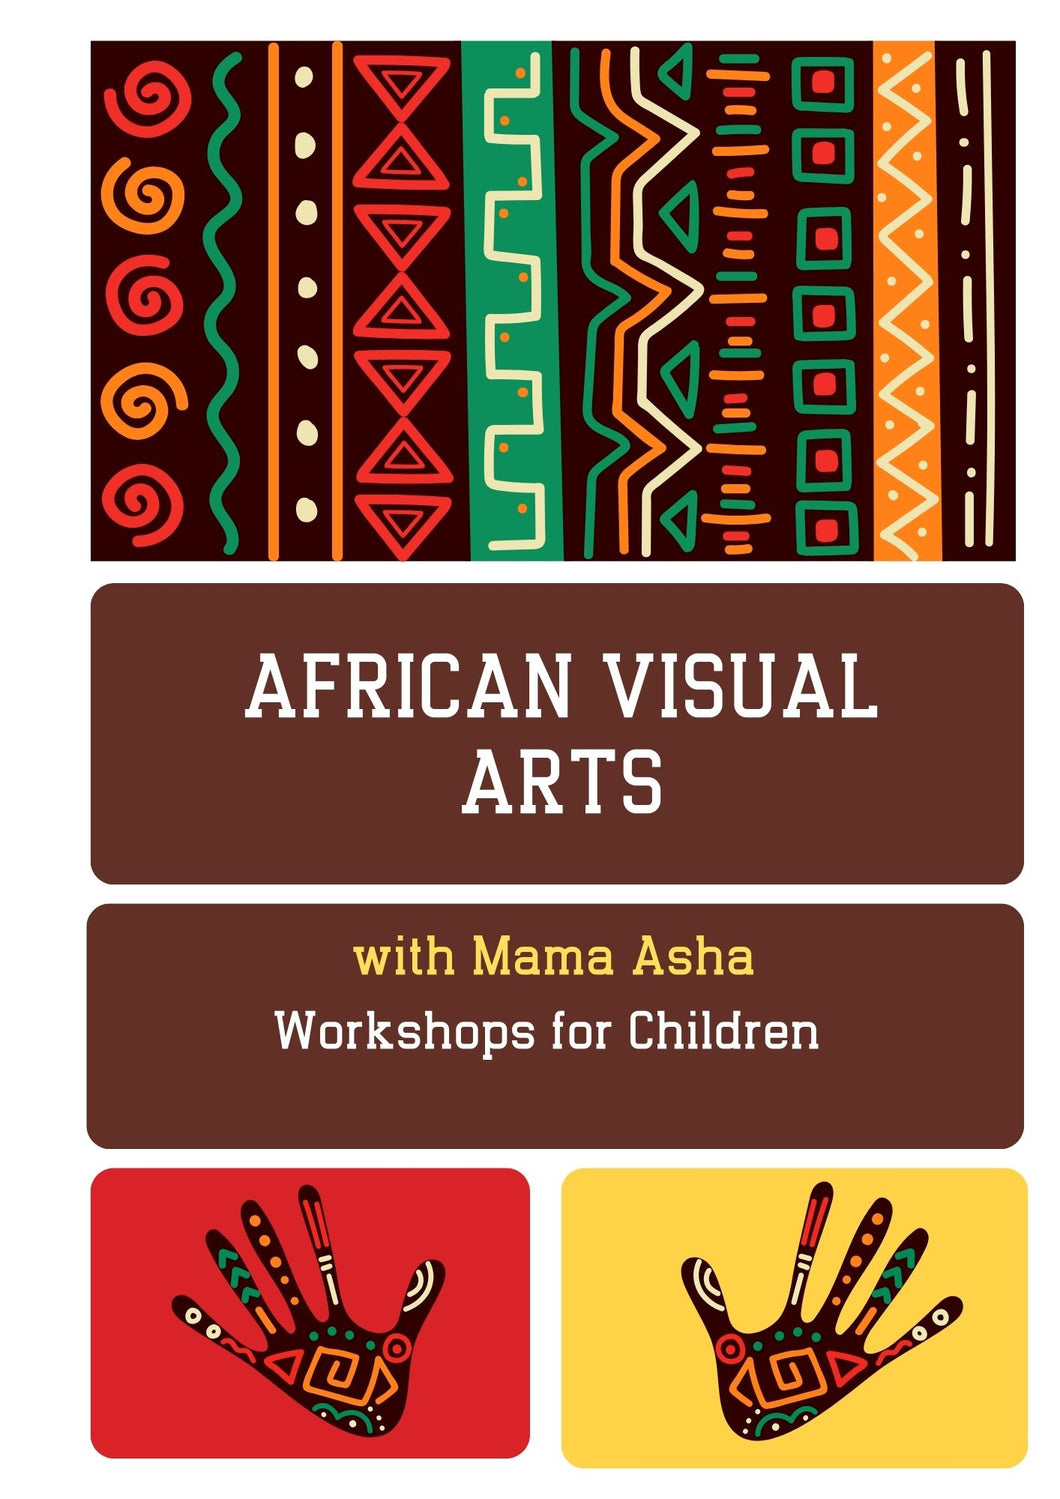 Online African Art Classes for Children 5-12 years